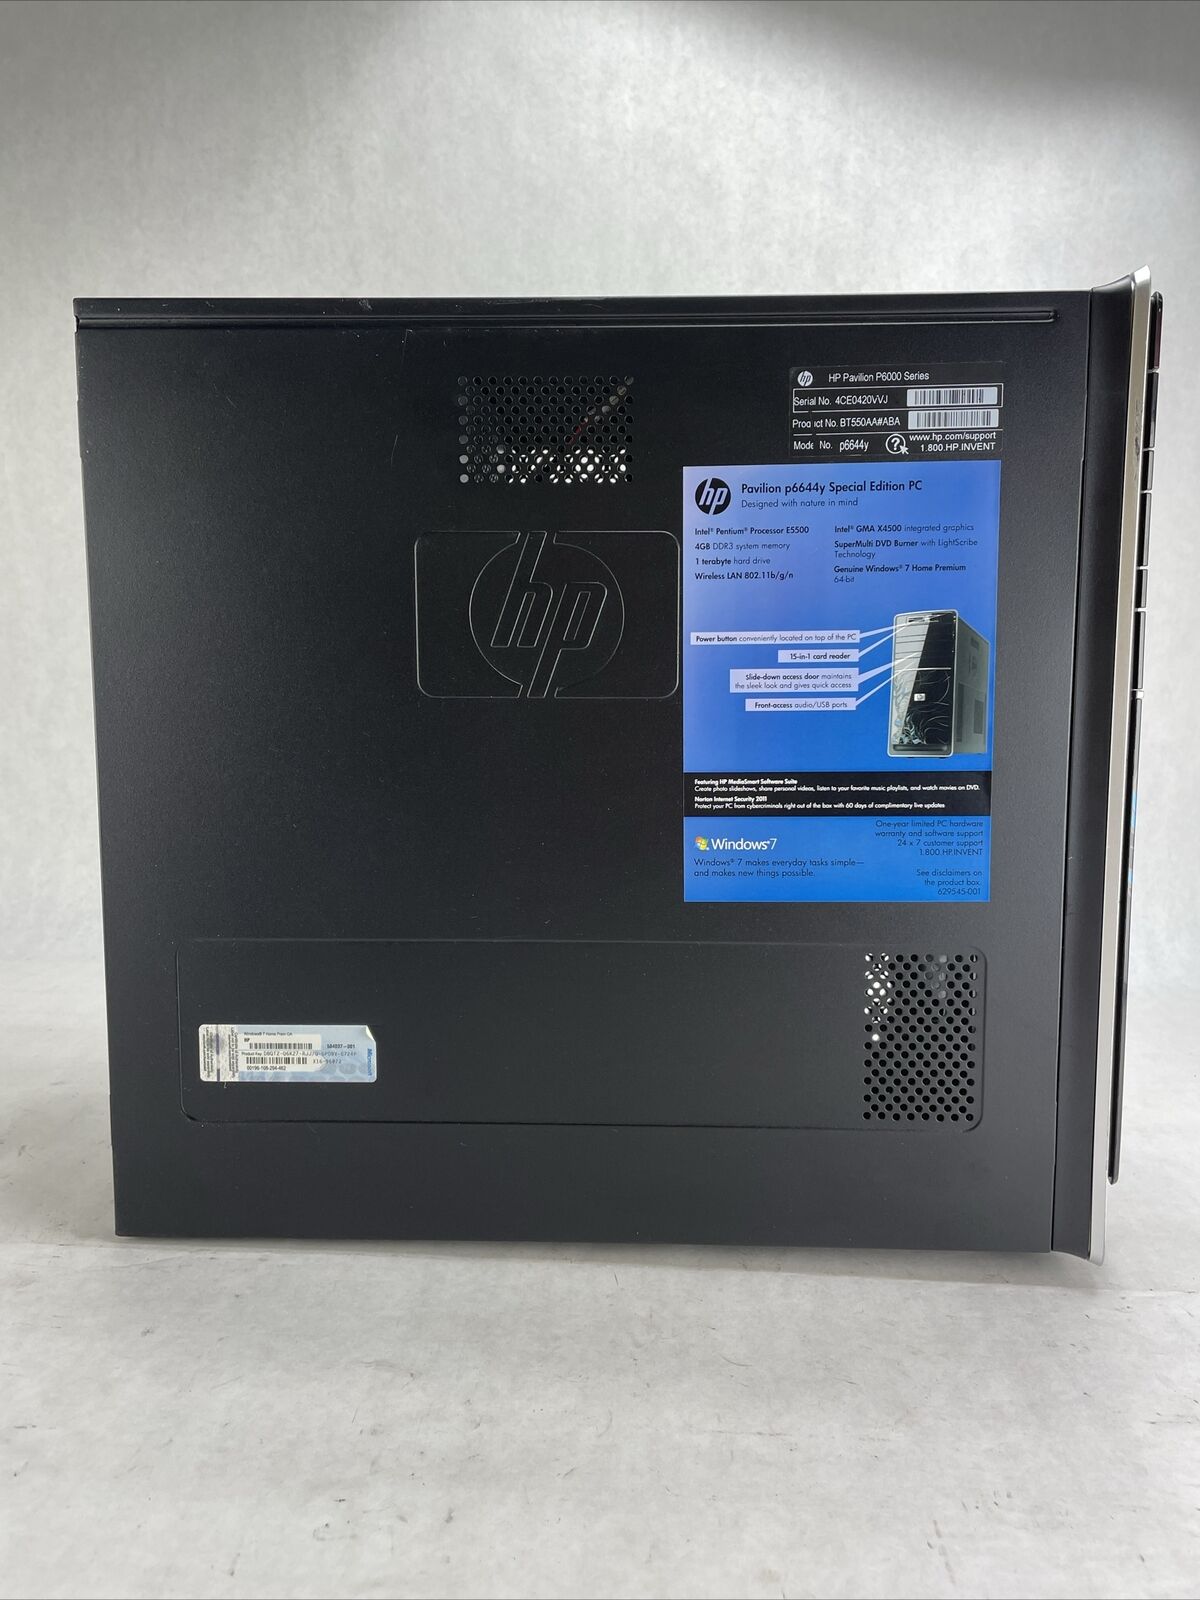 HP Pavilion P664XY MT Intel Pentium Dual-Core E5500 2.8GHz 4GB RAM No HDD No OS